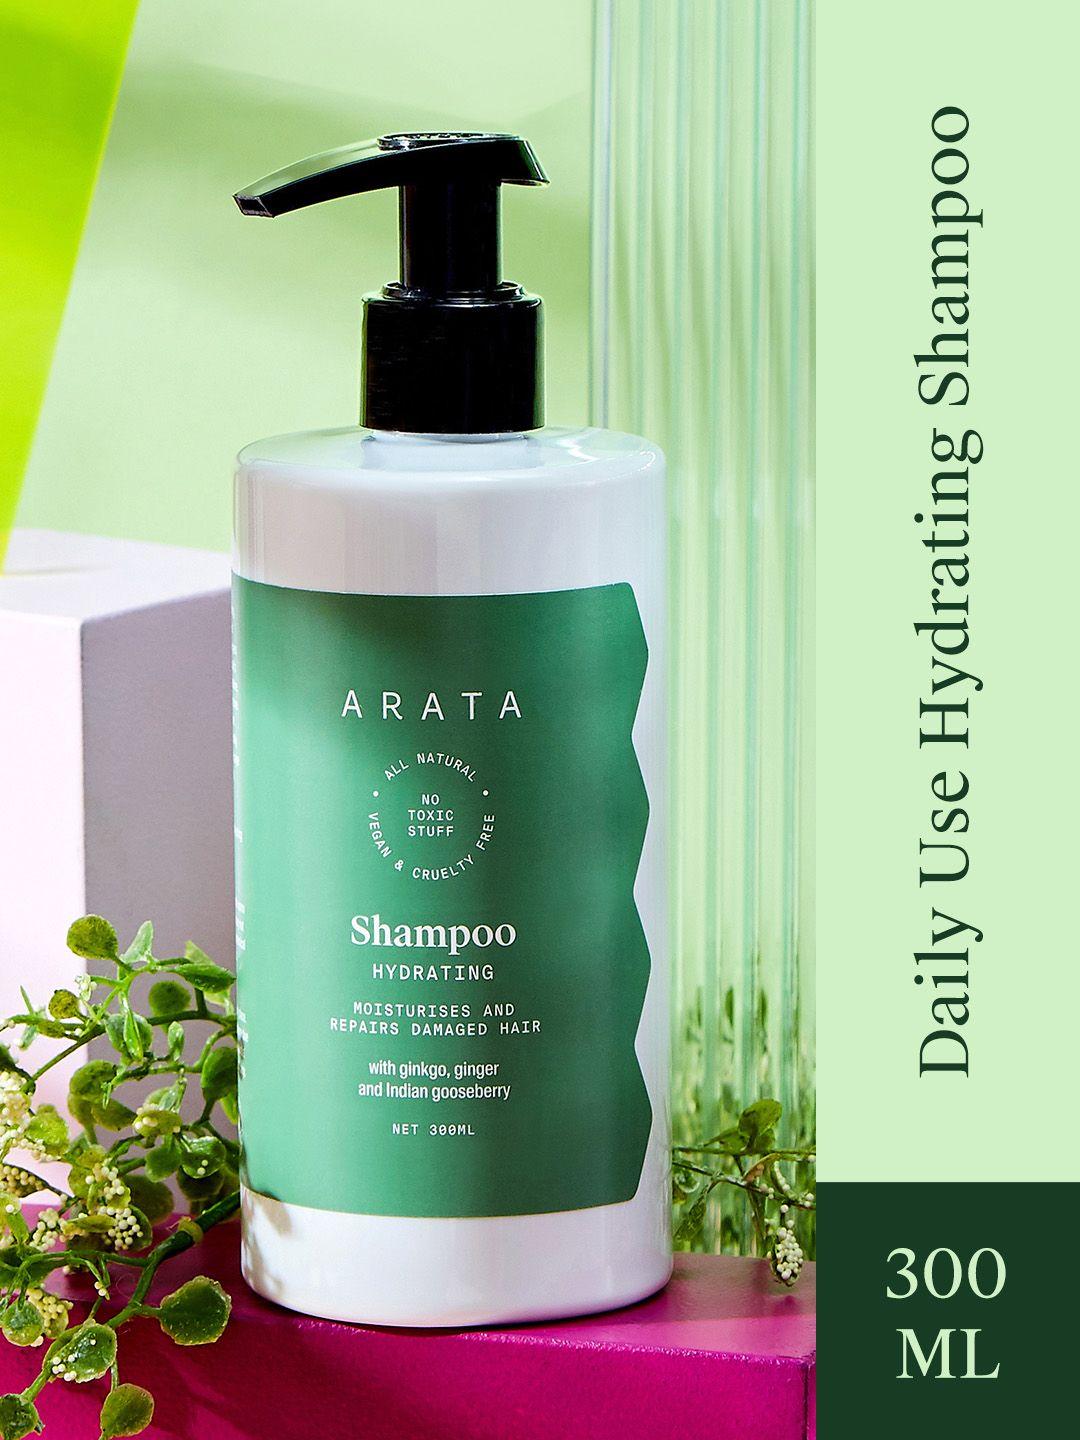 arata natural hydrating hair shampoo 300 ml